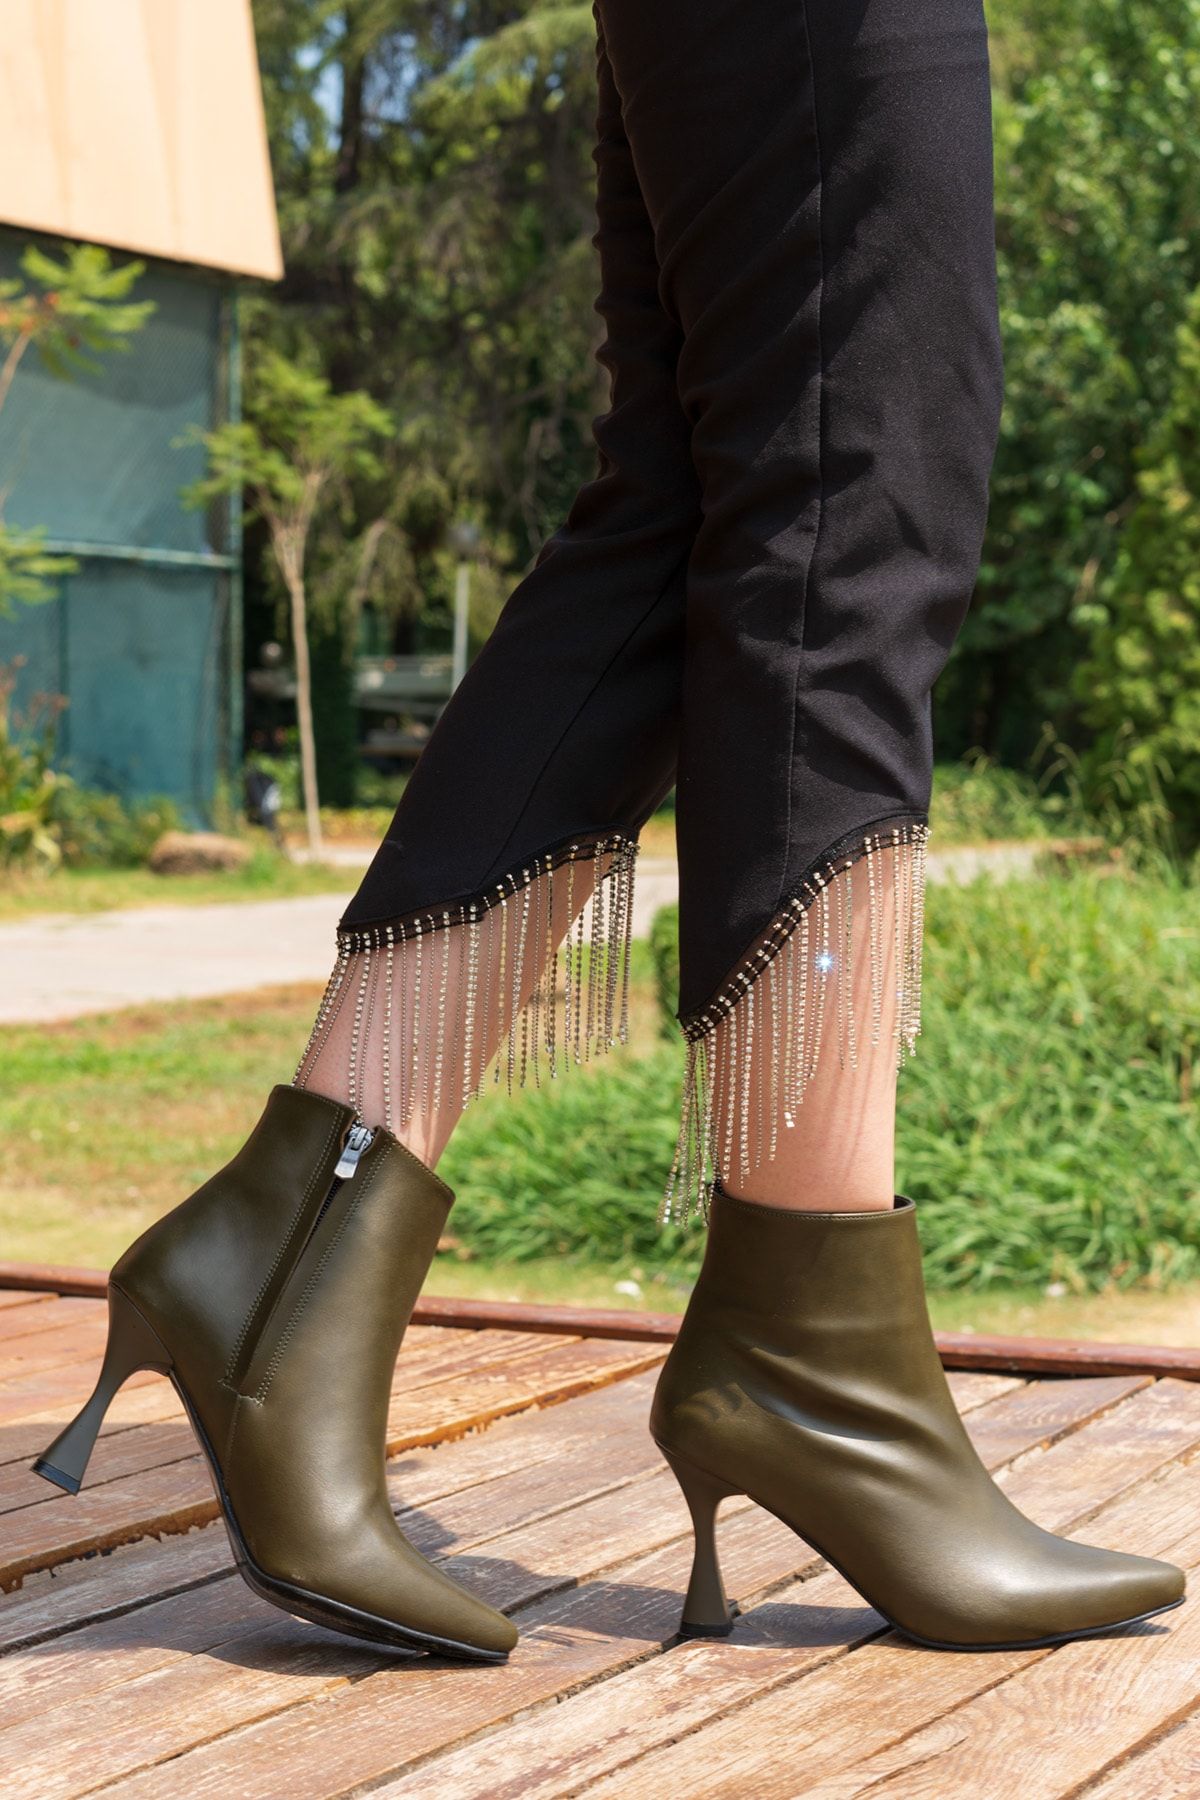 VIVIENNE WESTWOOD ANGLOMANIA Leather High Heel Platform Dress Booties Boot  Heels | eBay